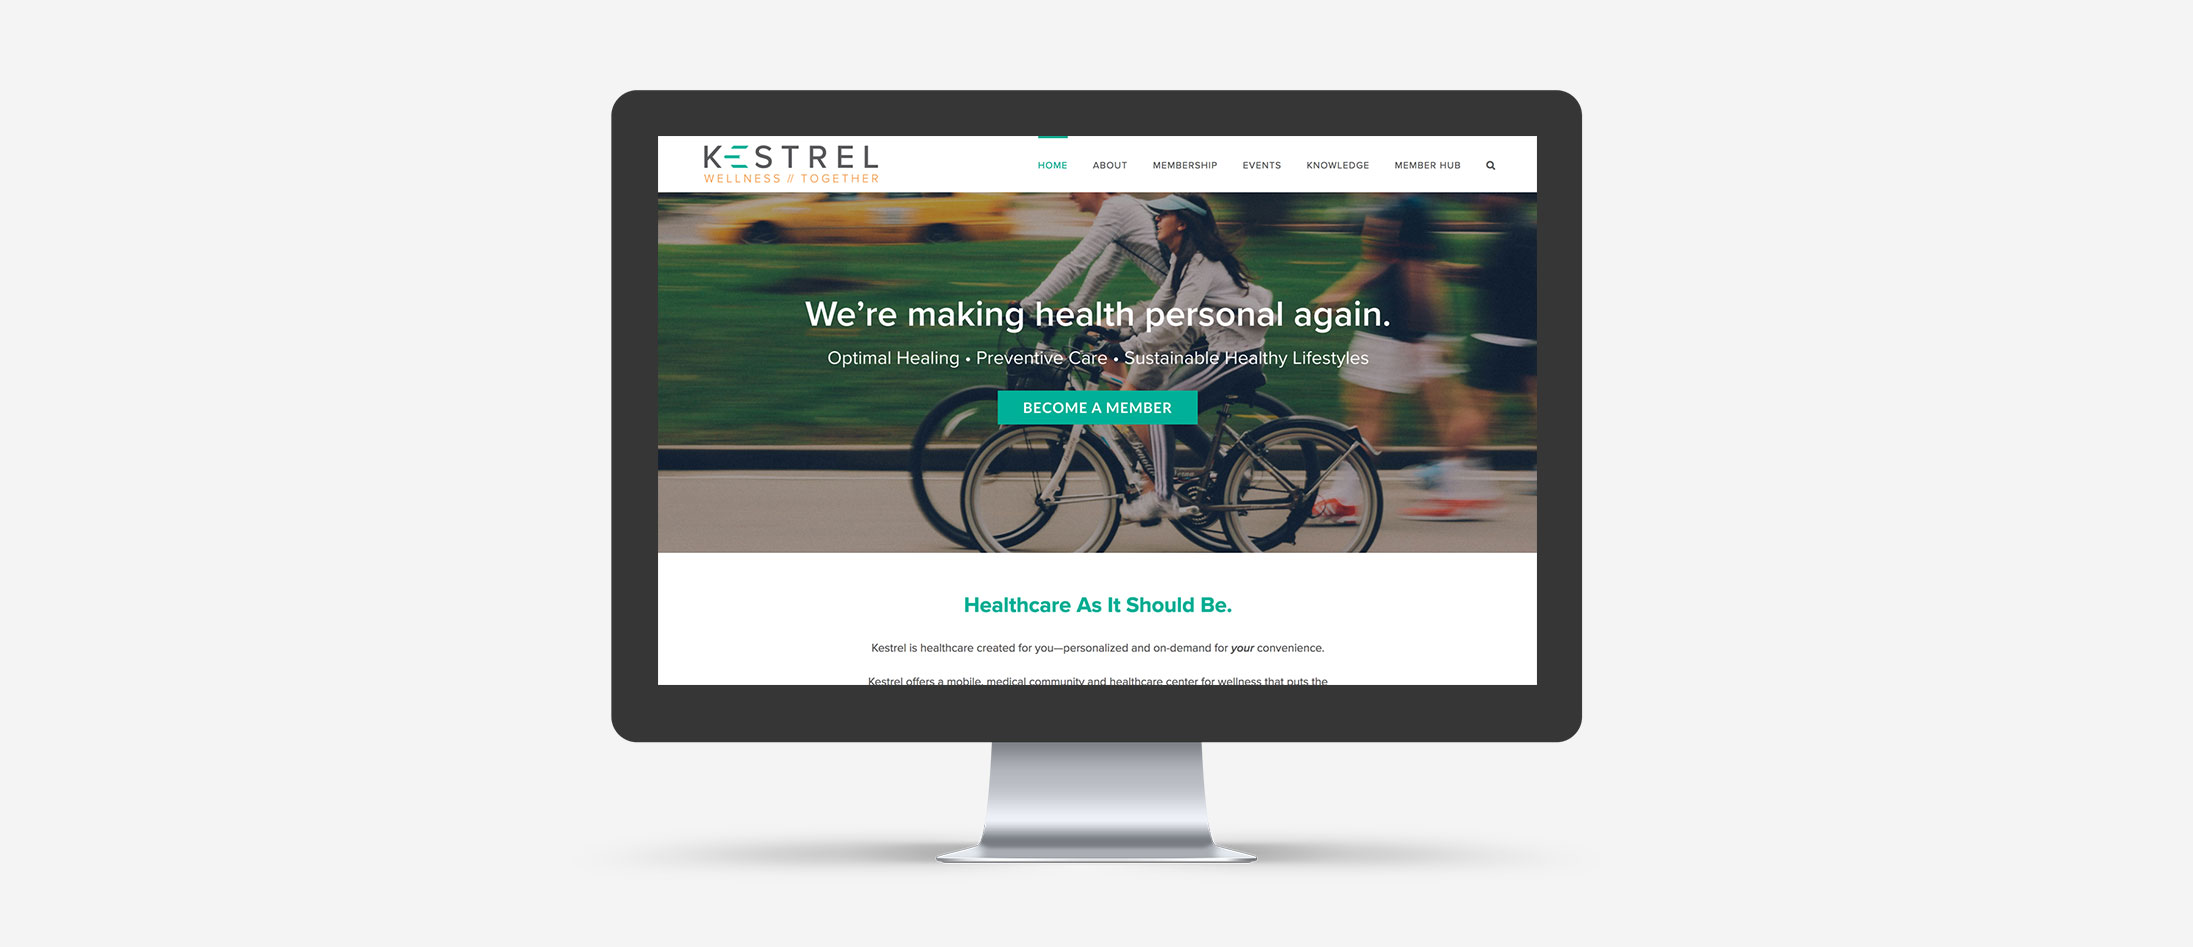 Mockup of the new Kestrel WordPress website homepage loaded on a large desktop screen